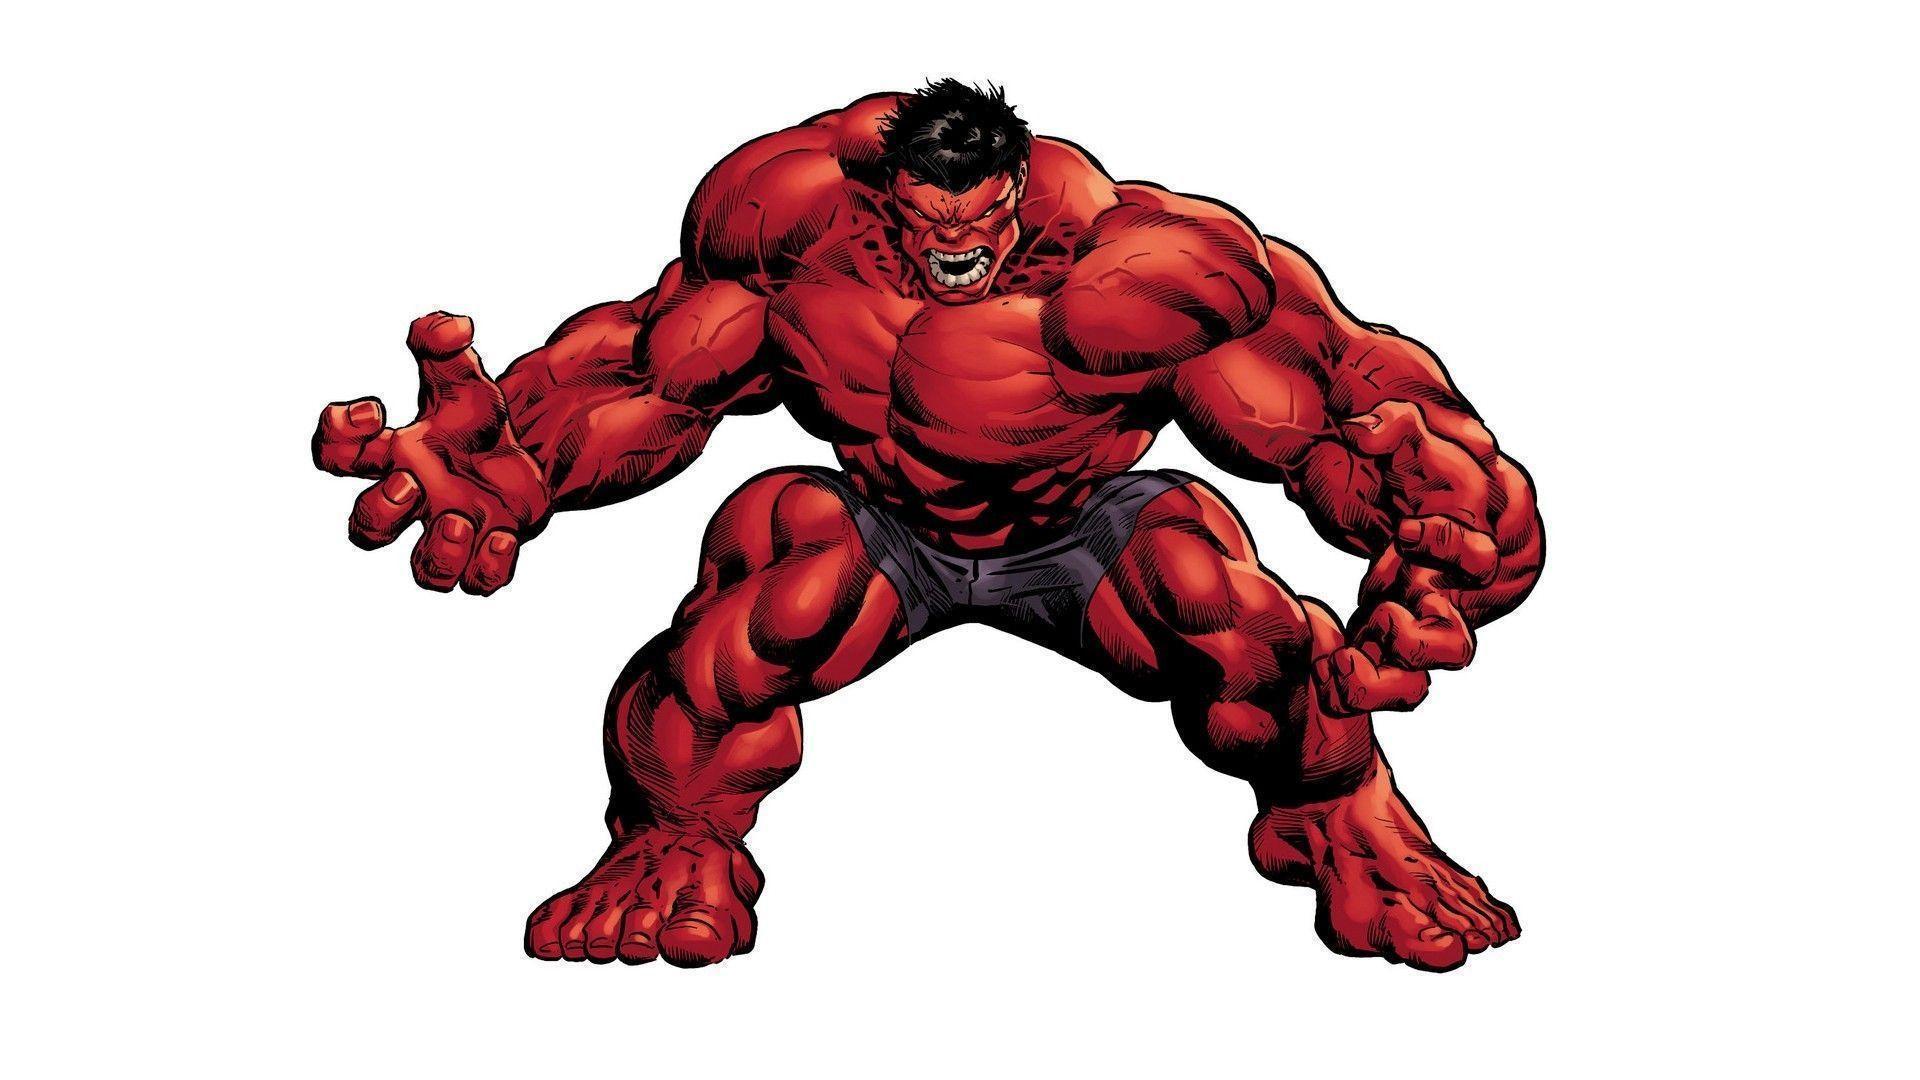 Red hulk image with white background Stock Free Image